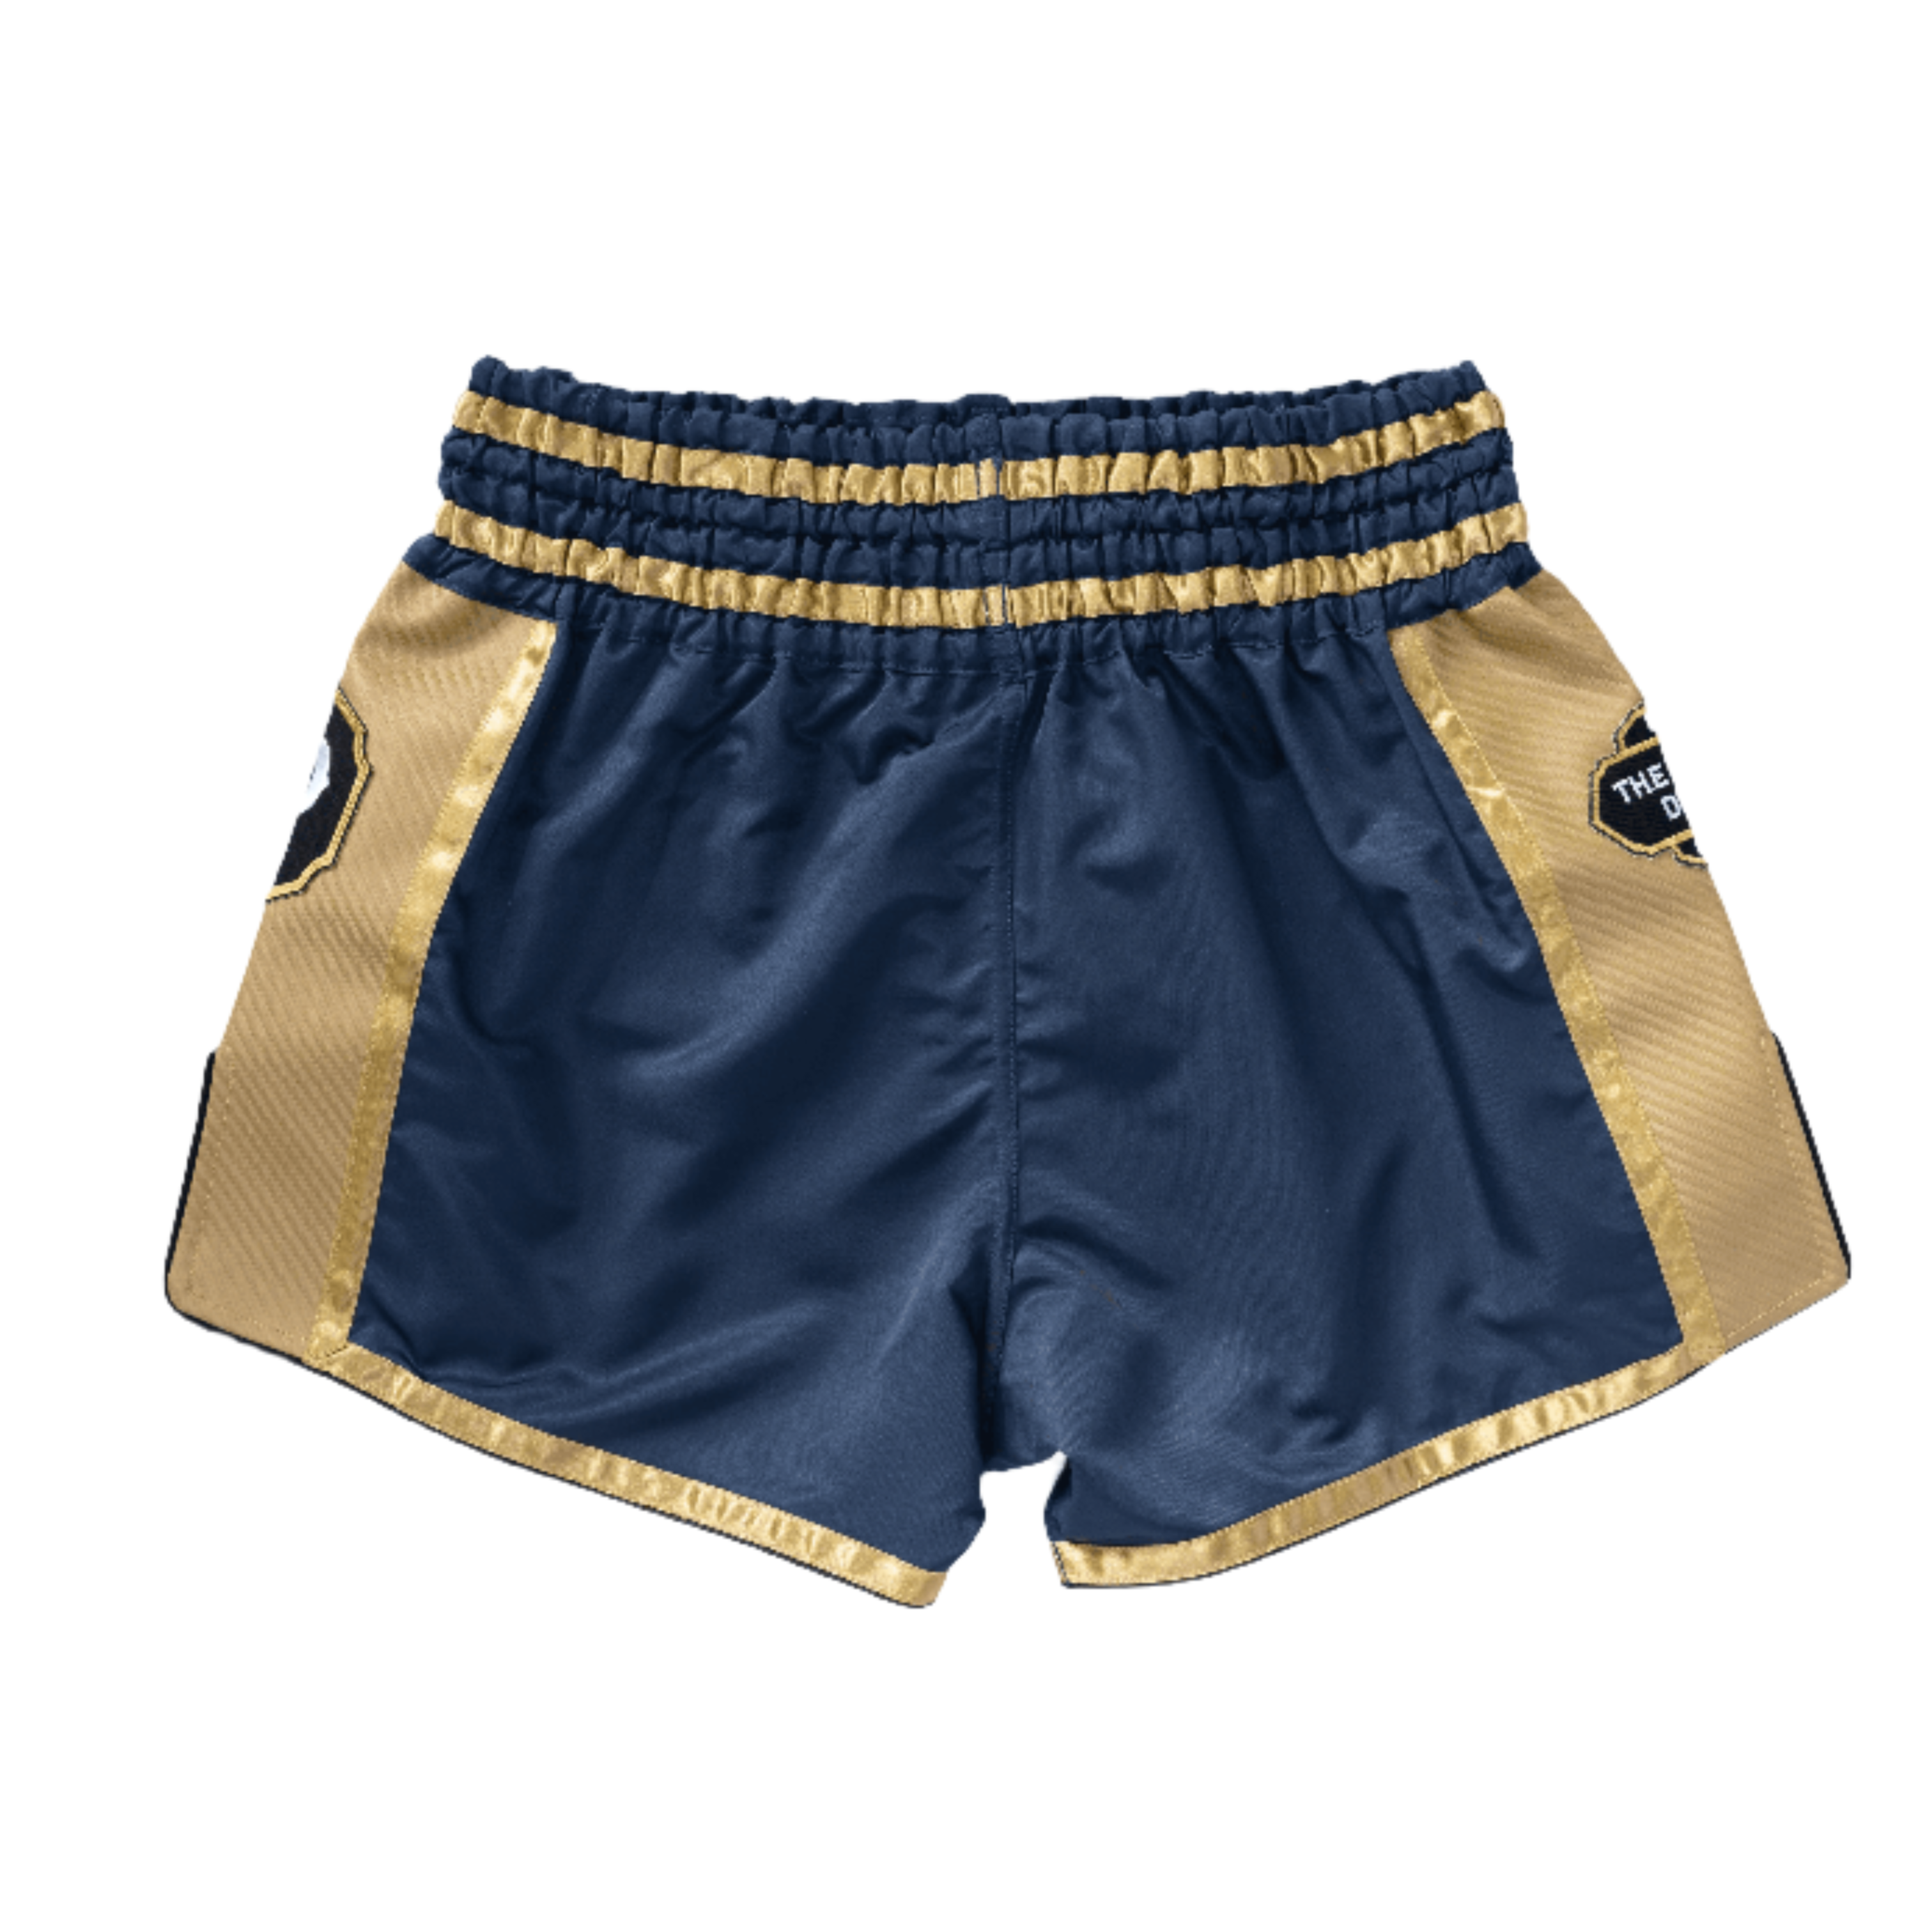 PRYDE Muay Thai Shorts - Navy & Gold - Muay Thailand